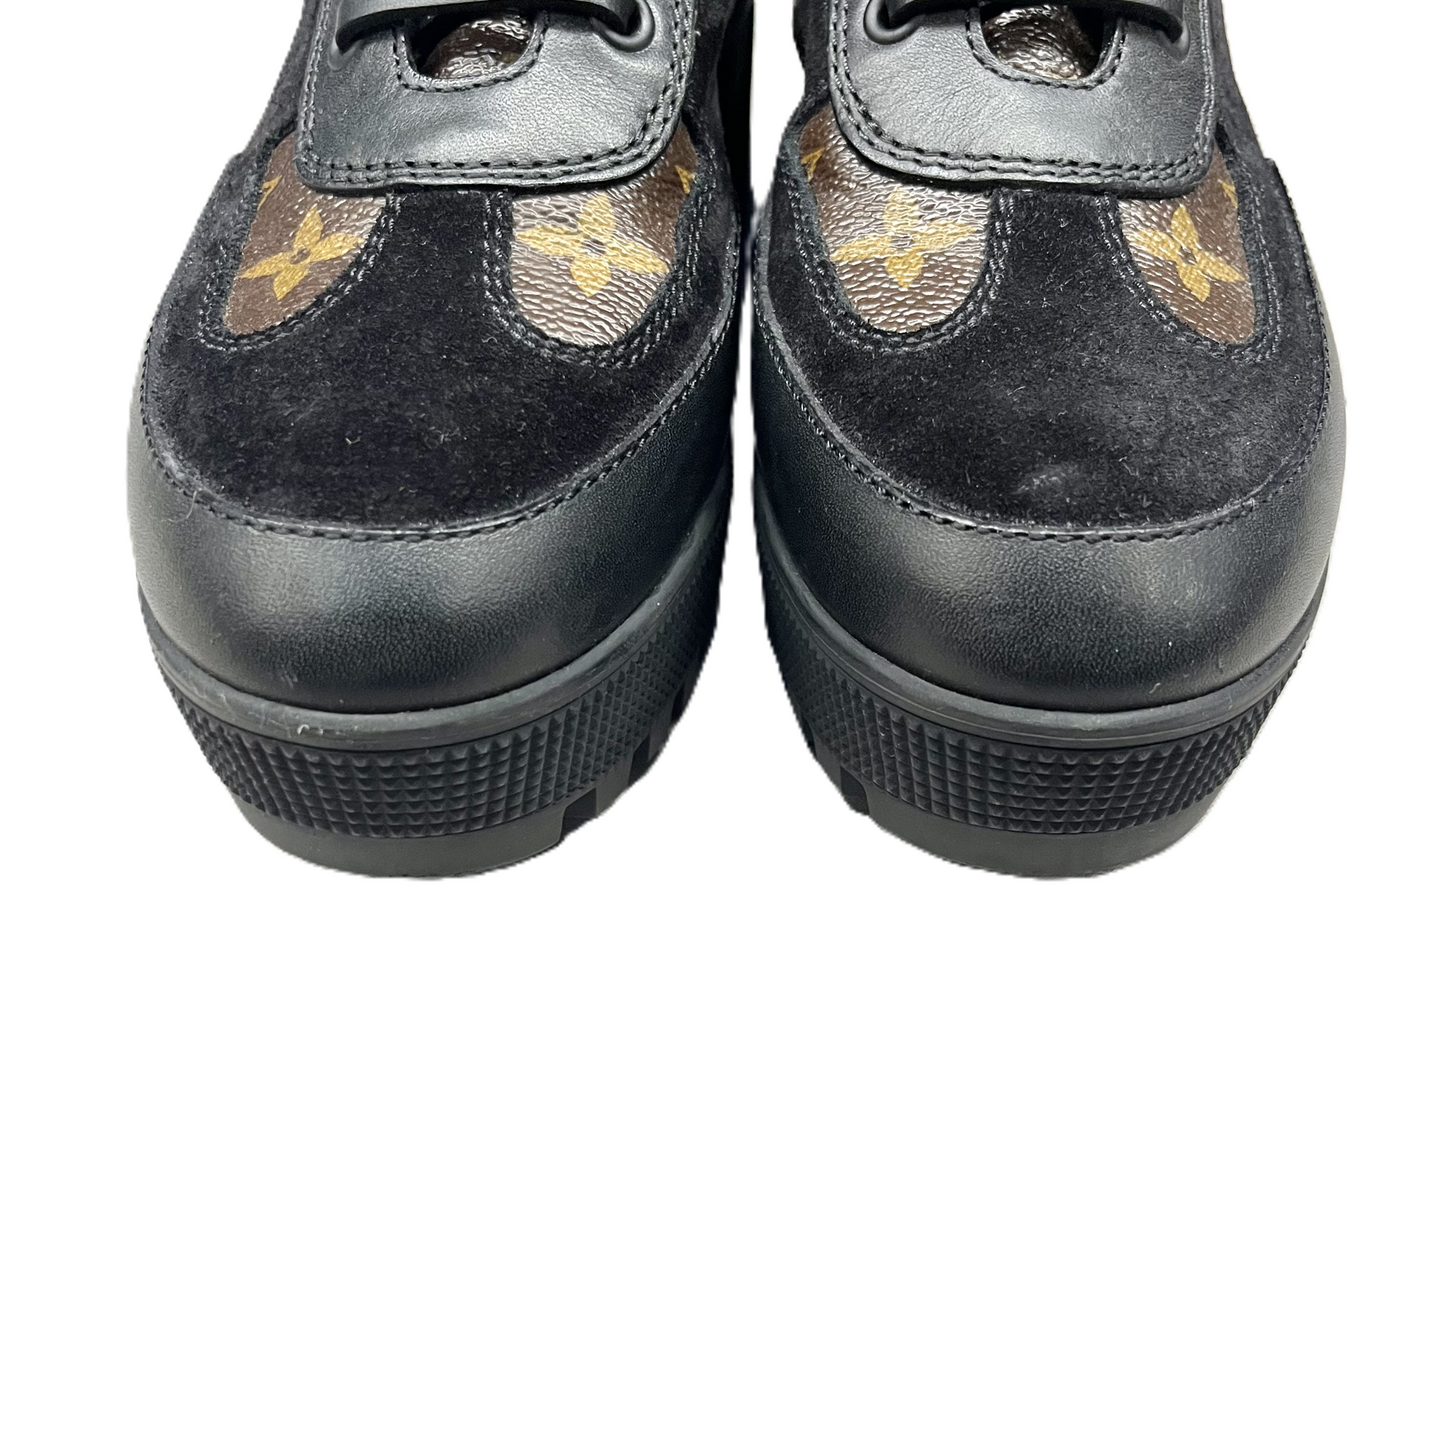 Black & Brown Boots Luxury Designer By Louis Vuitton, Size: 6.5